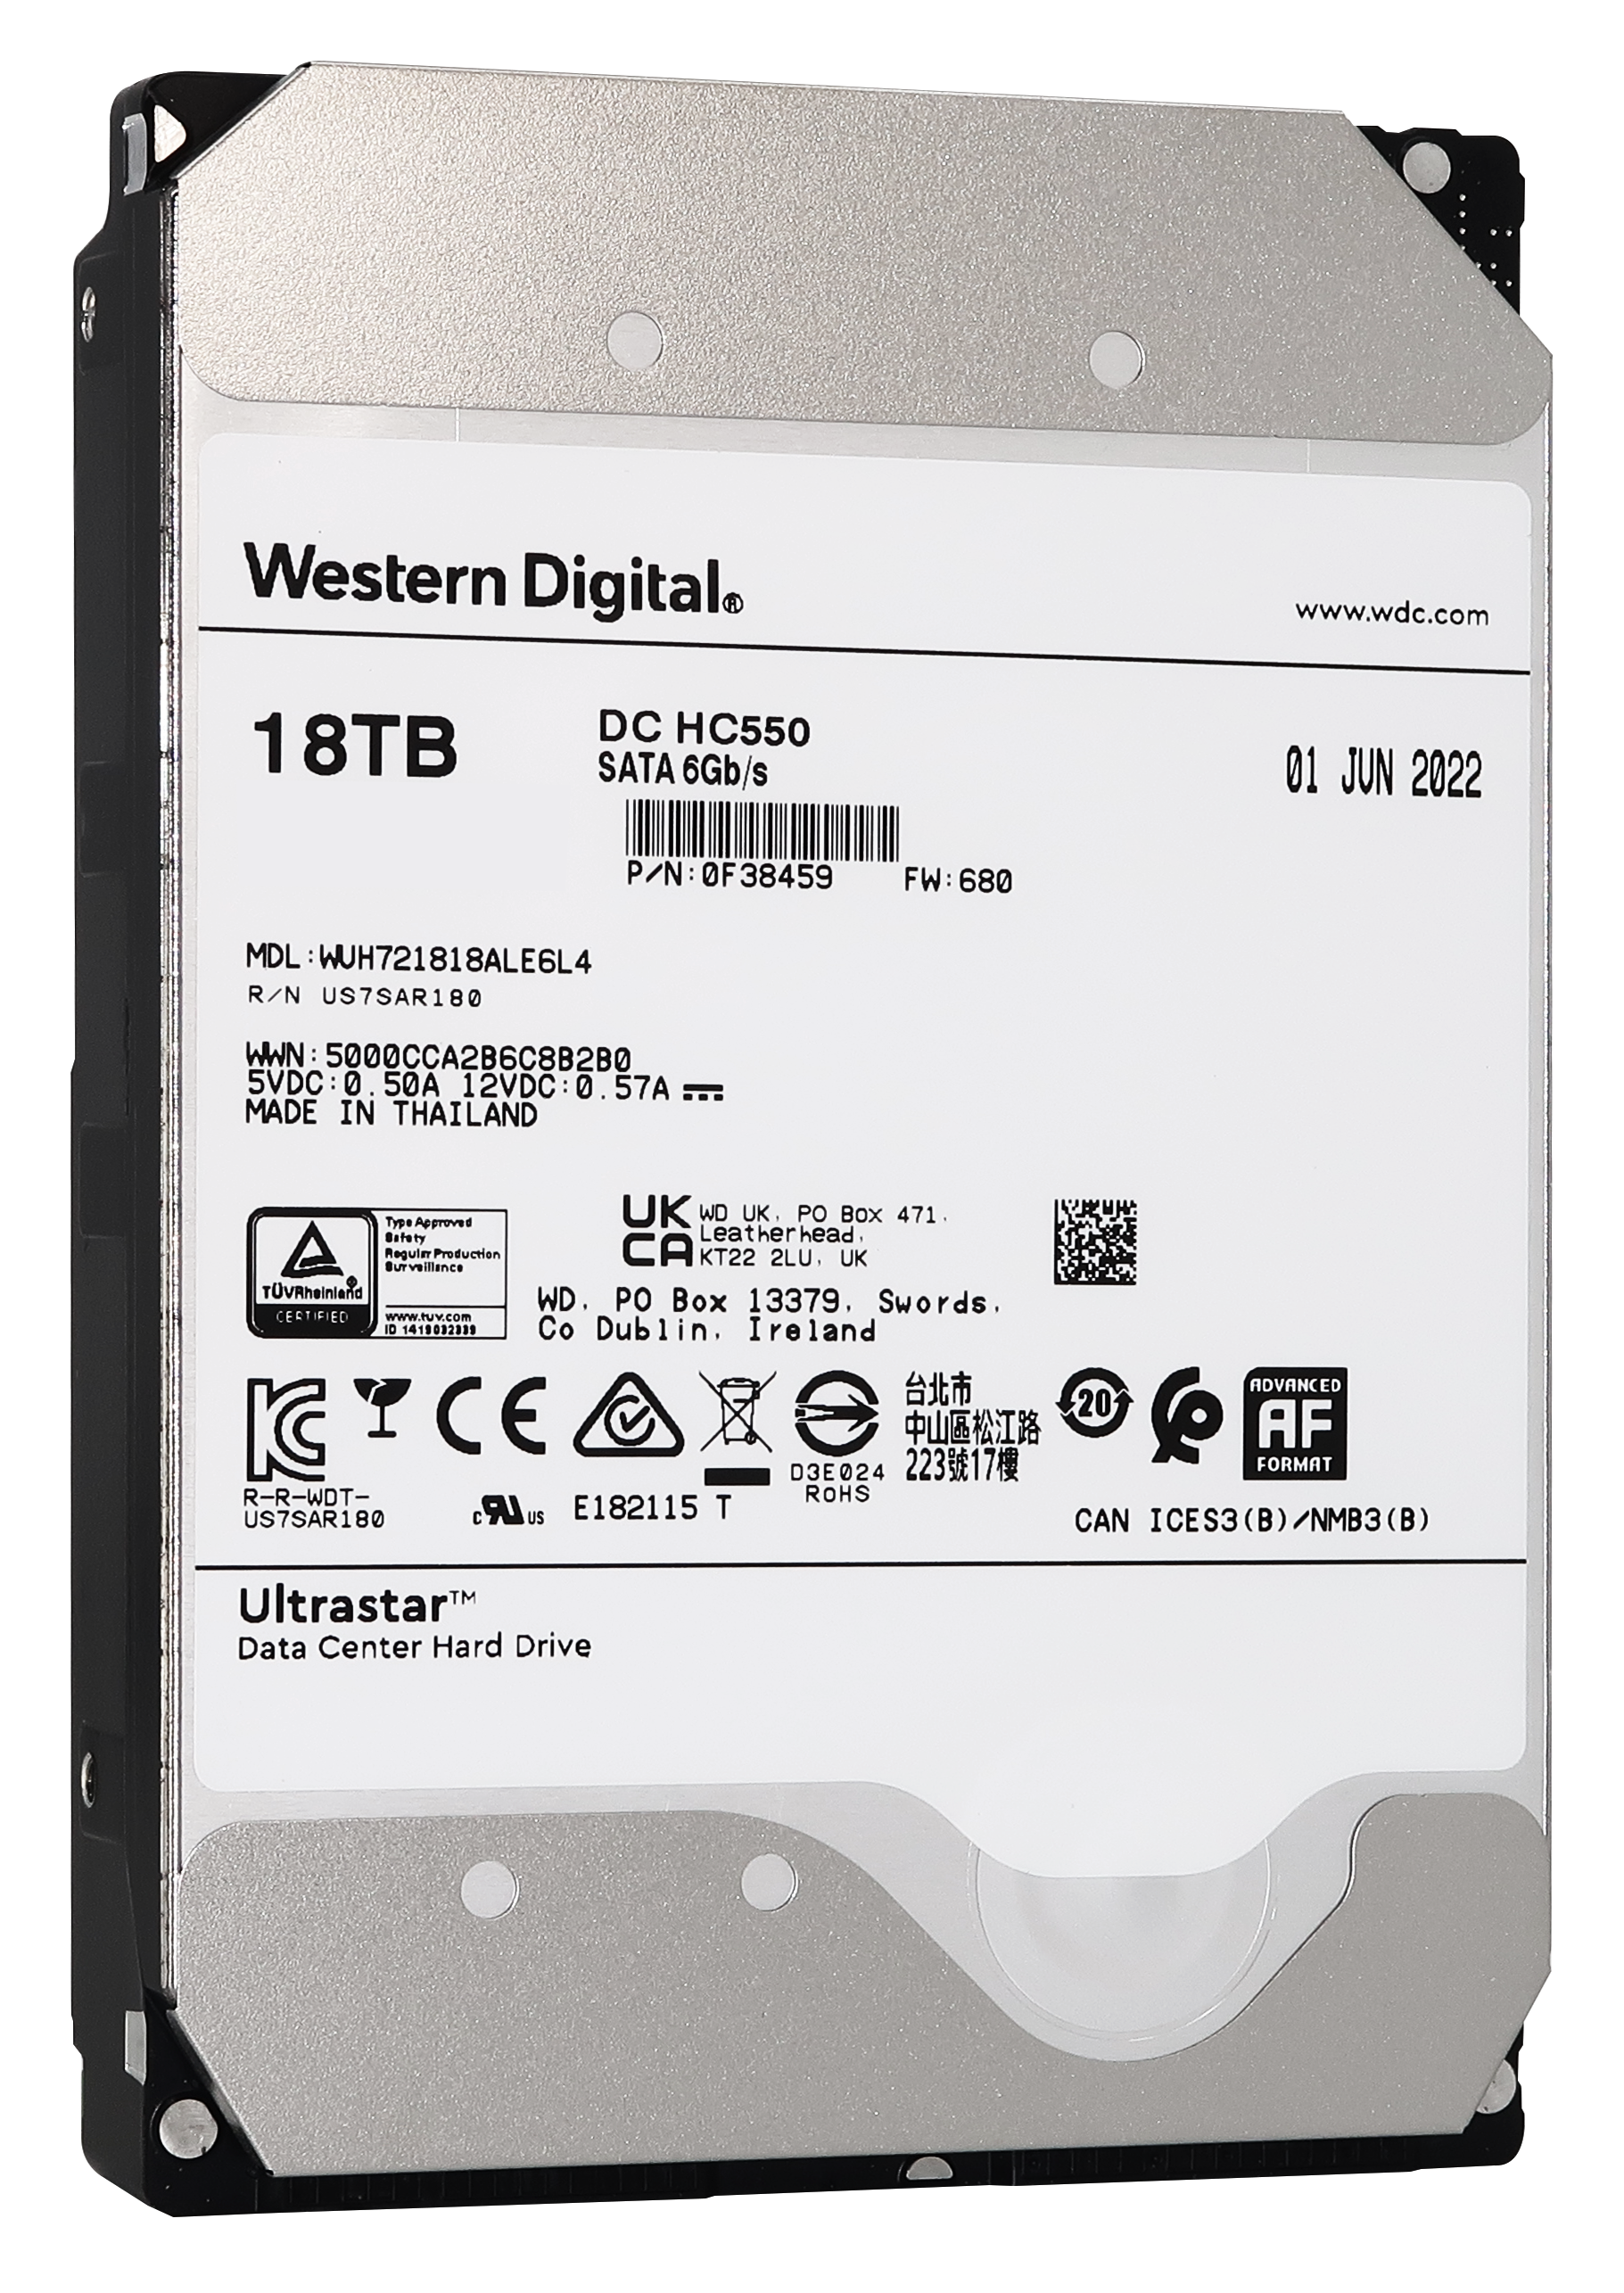 WD Ultrastar 18TB HDD DC HC550 7200RPM SATA 6Gb/s 3.5" Enterprise Hard Drive - WUH721818ALE6L4 (0F38459) - Front View